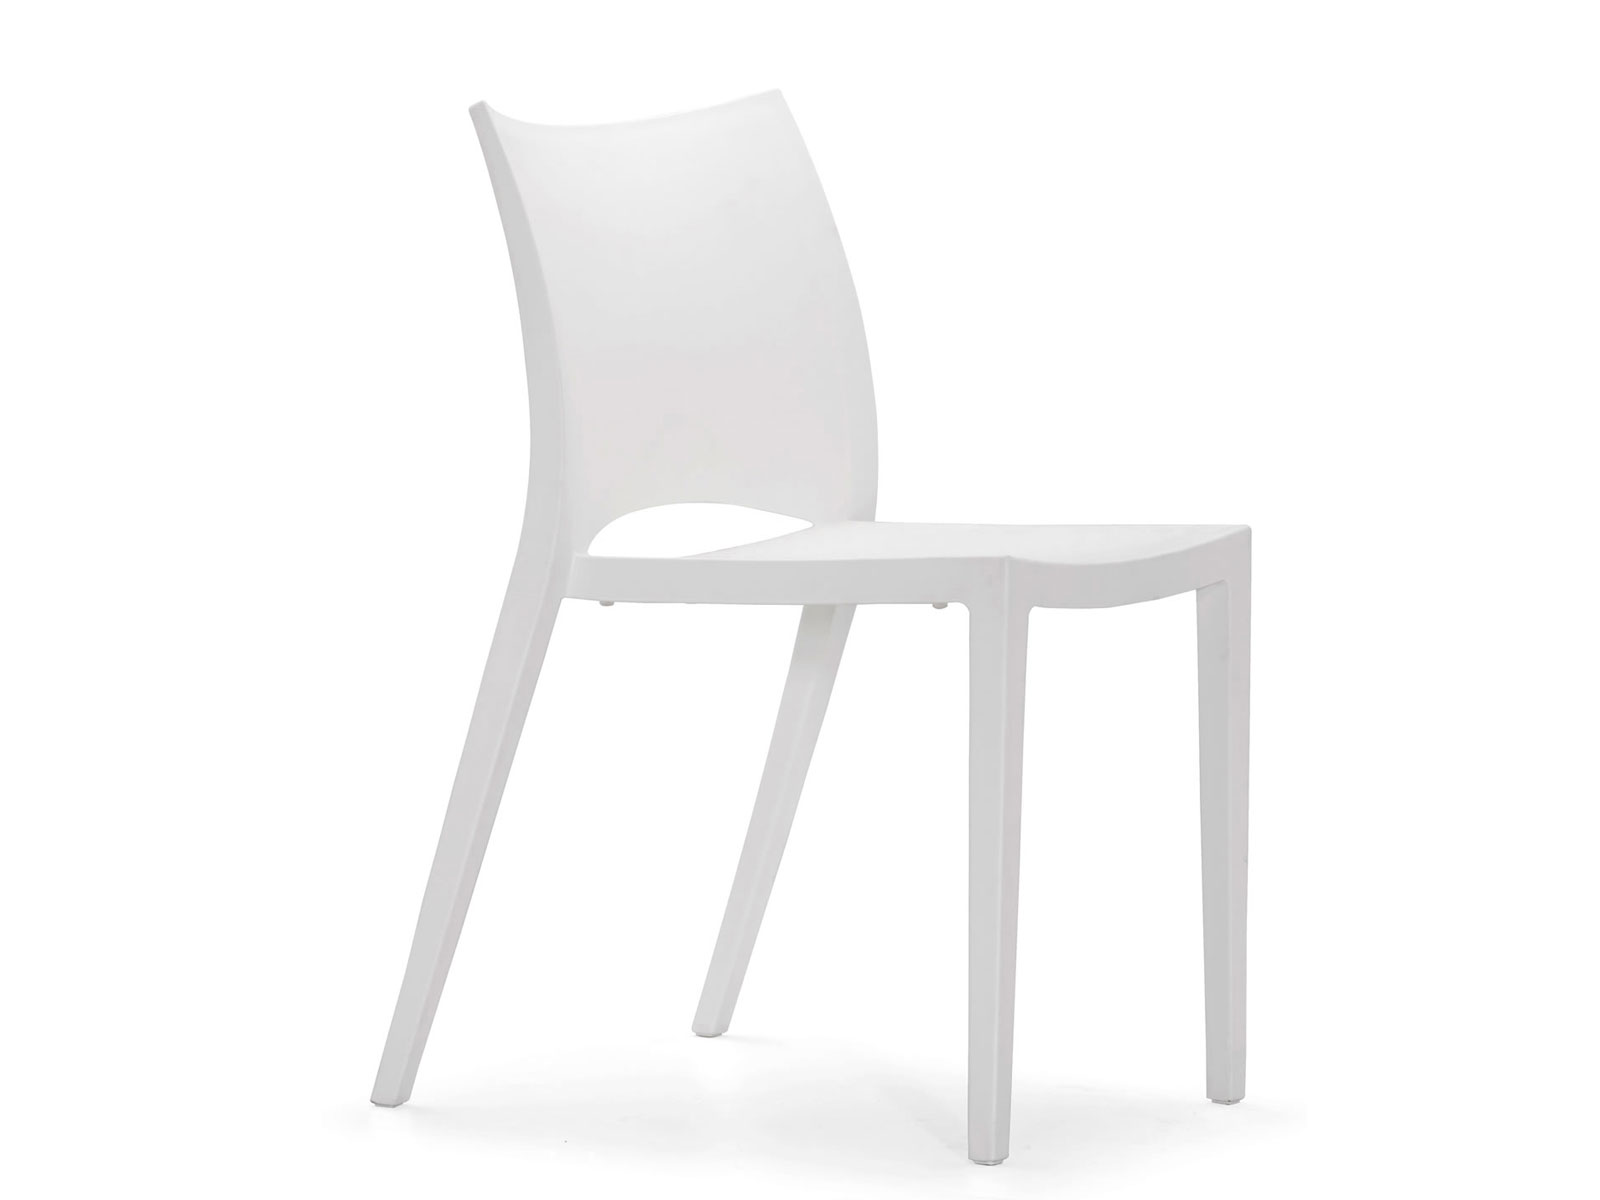 CEGS-001 Razor Chair